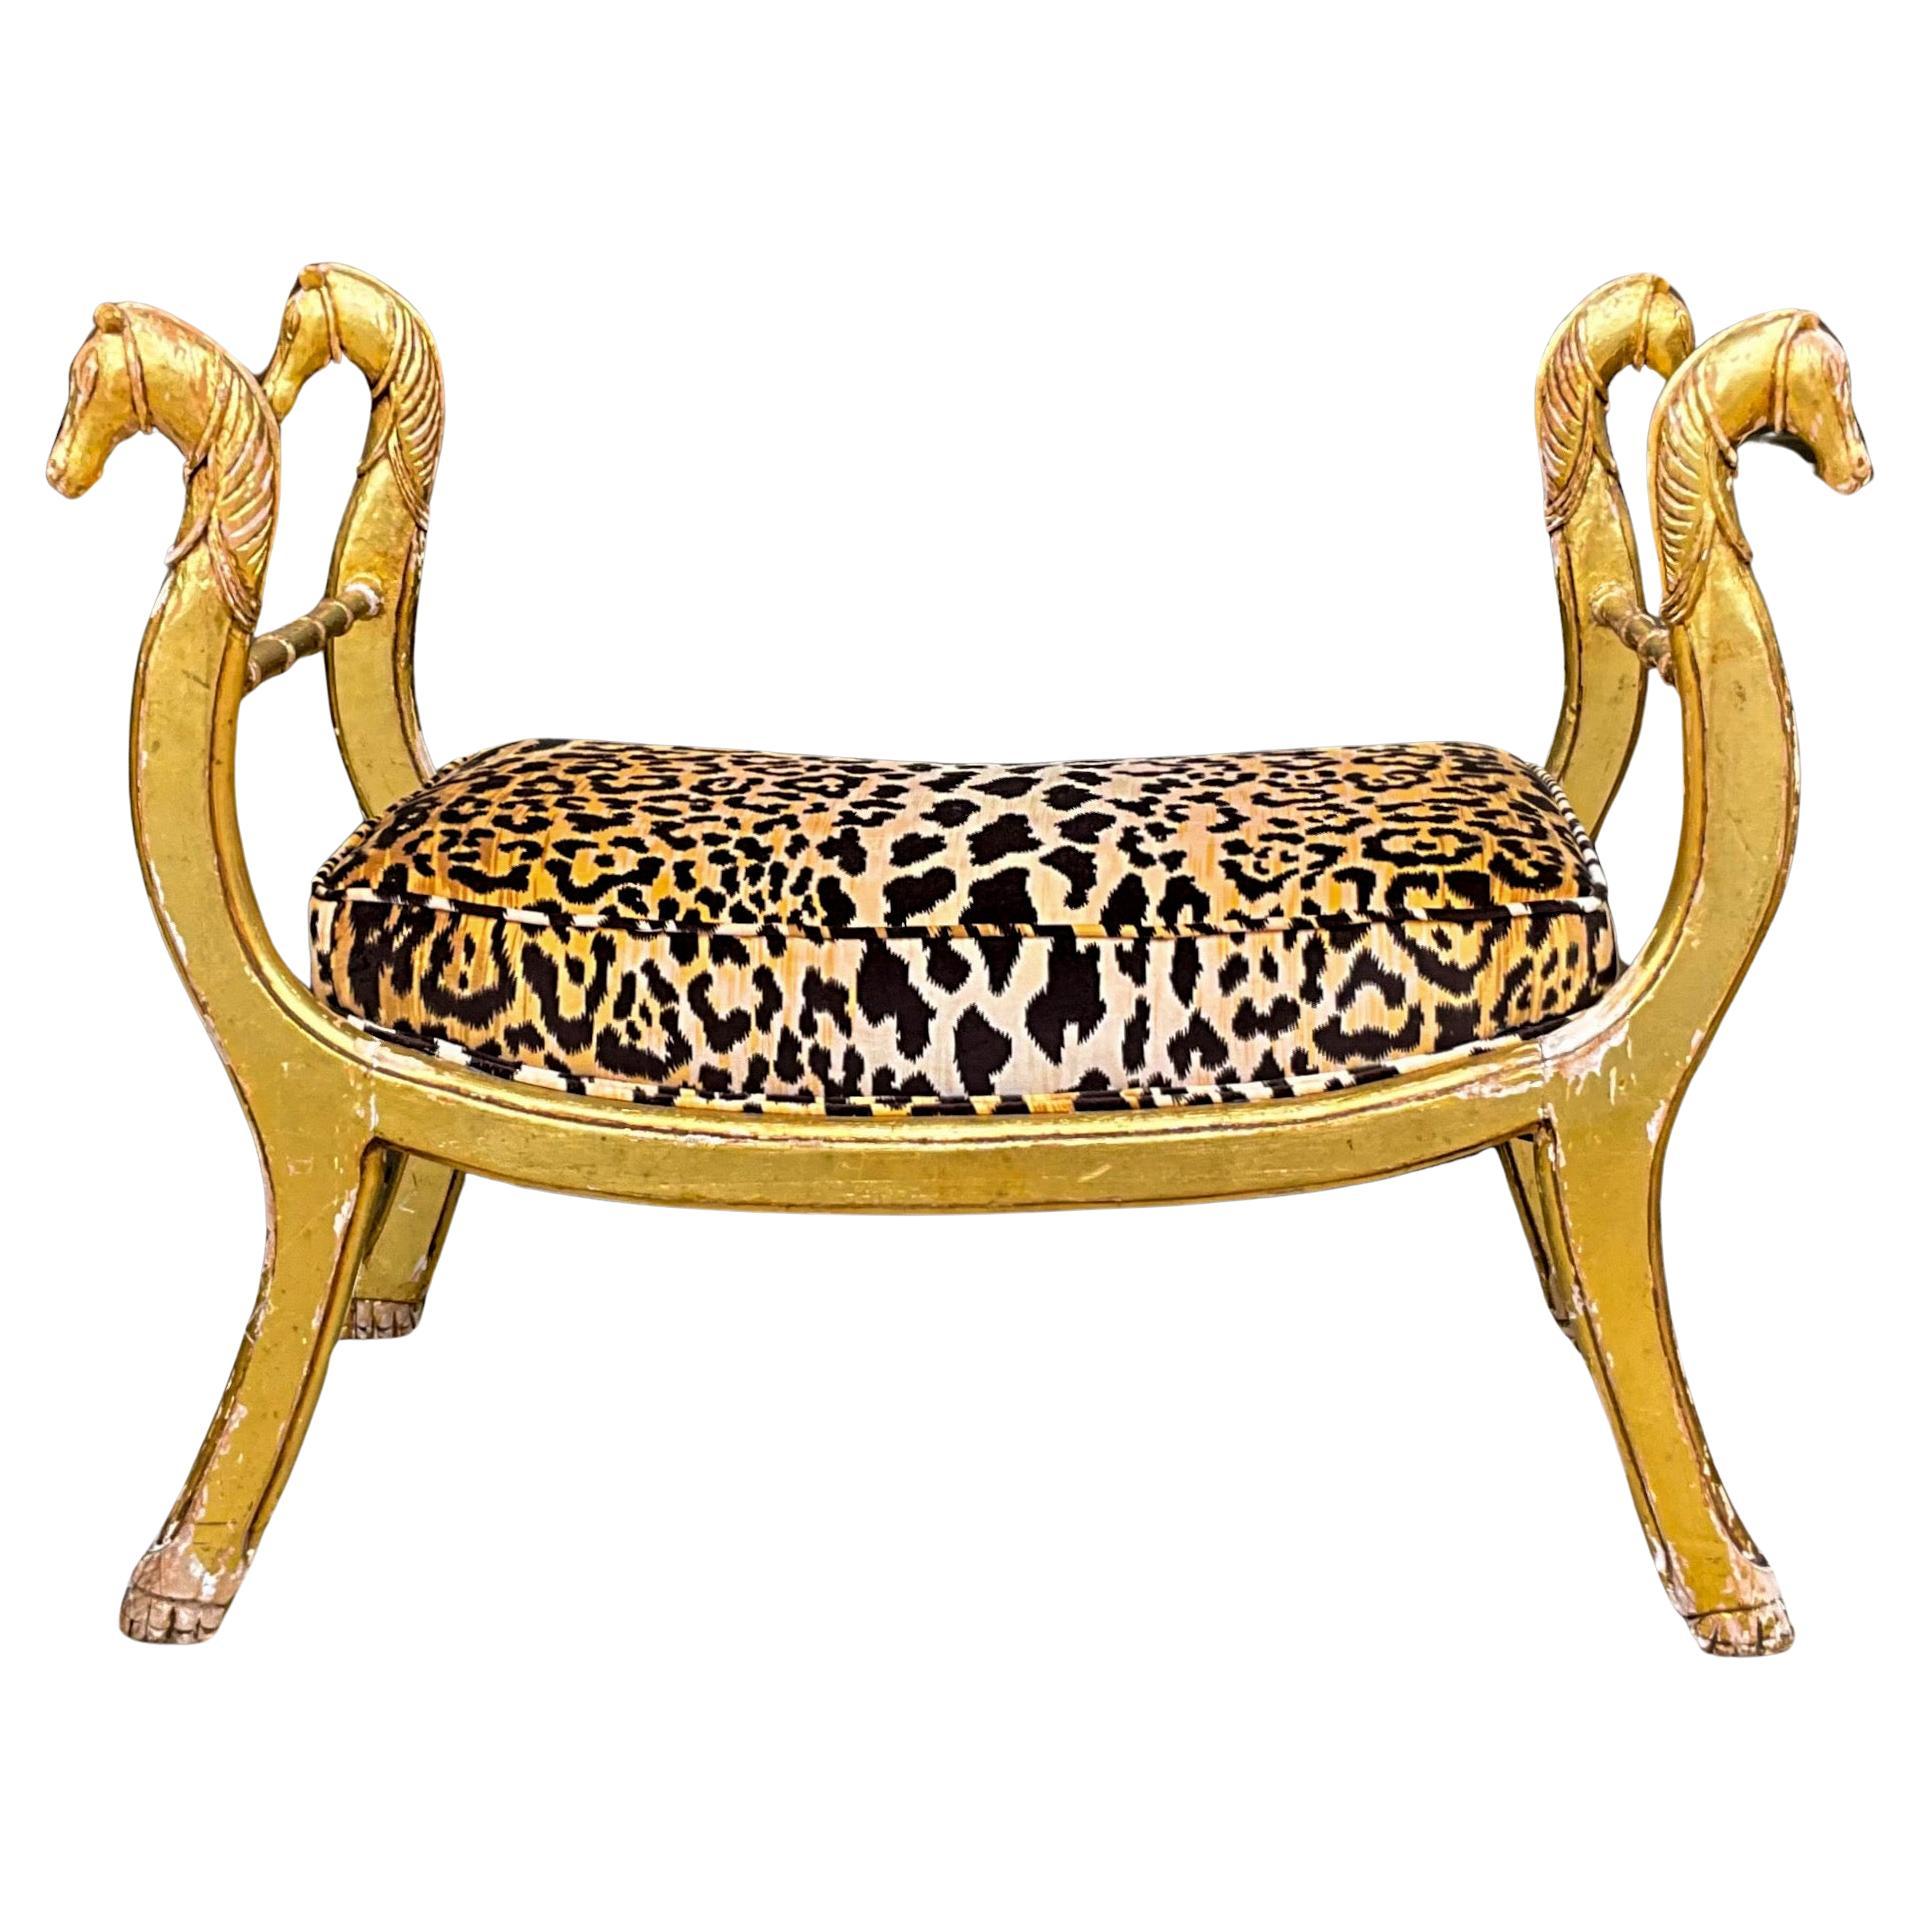 19th-C. Neo-Classical Maison Jansen Style Giltwood Bench In Leopard Velvet 